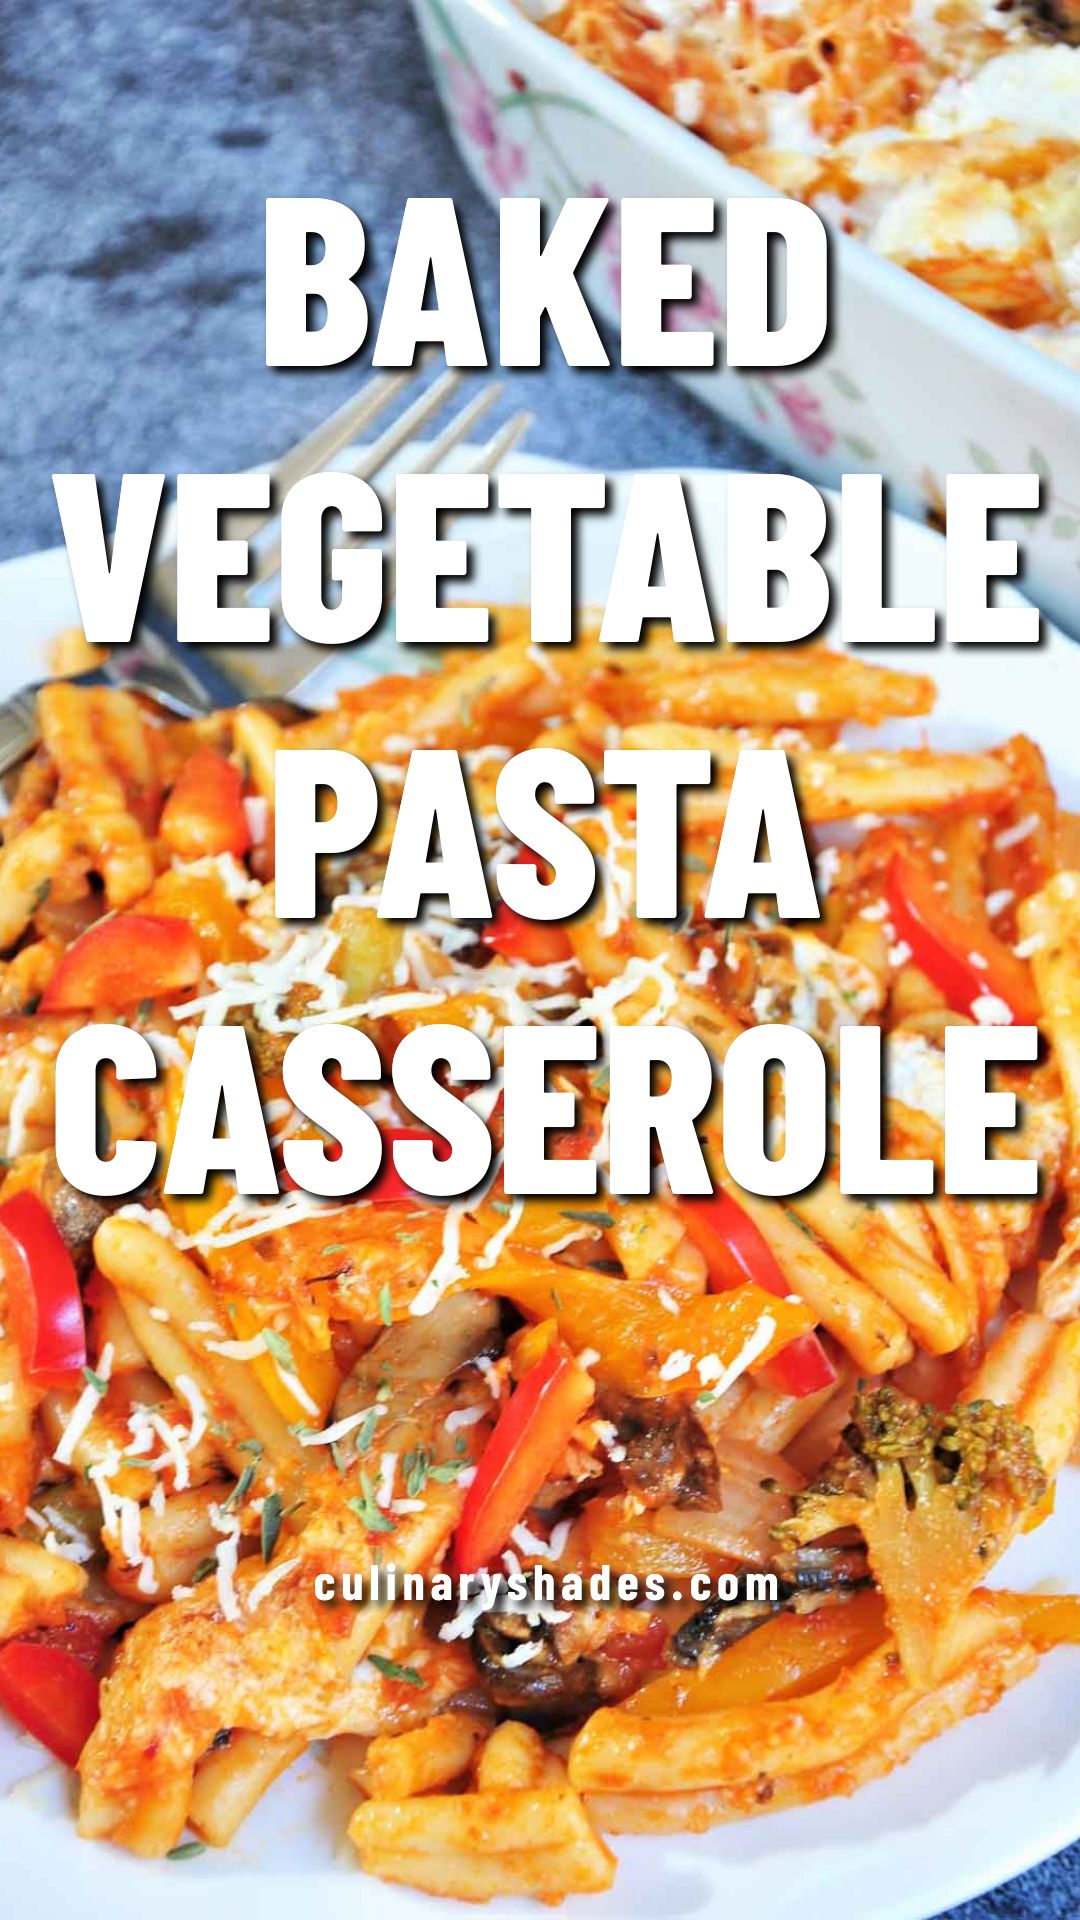 baked vegetable pasta casserole pin.